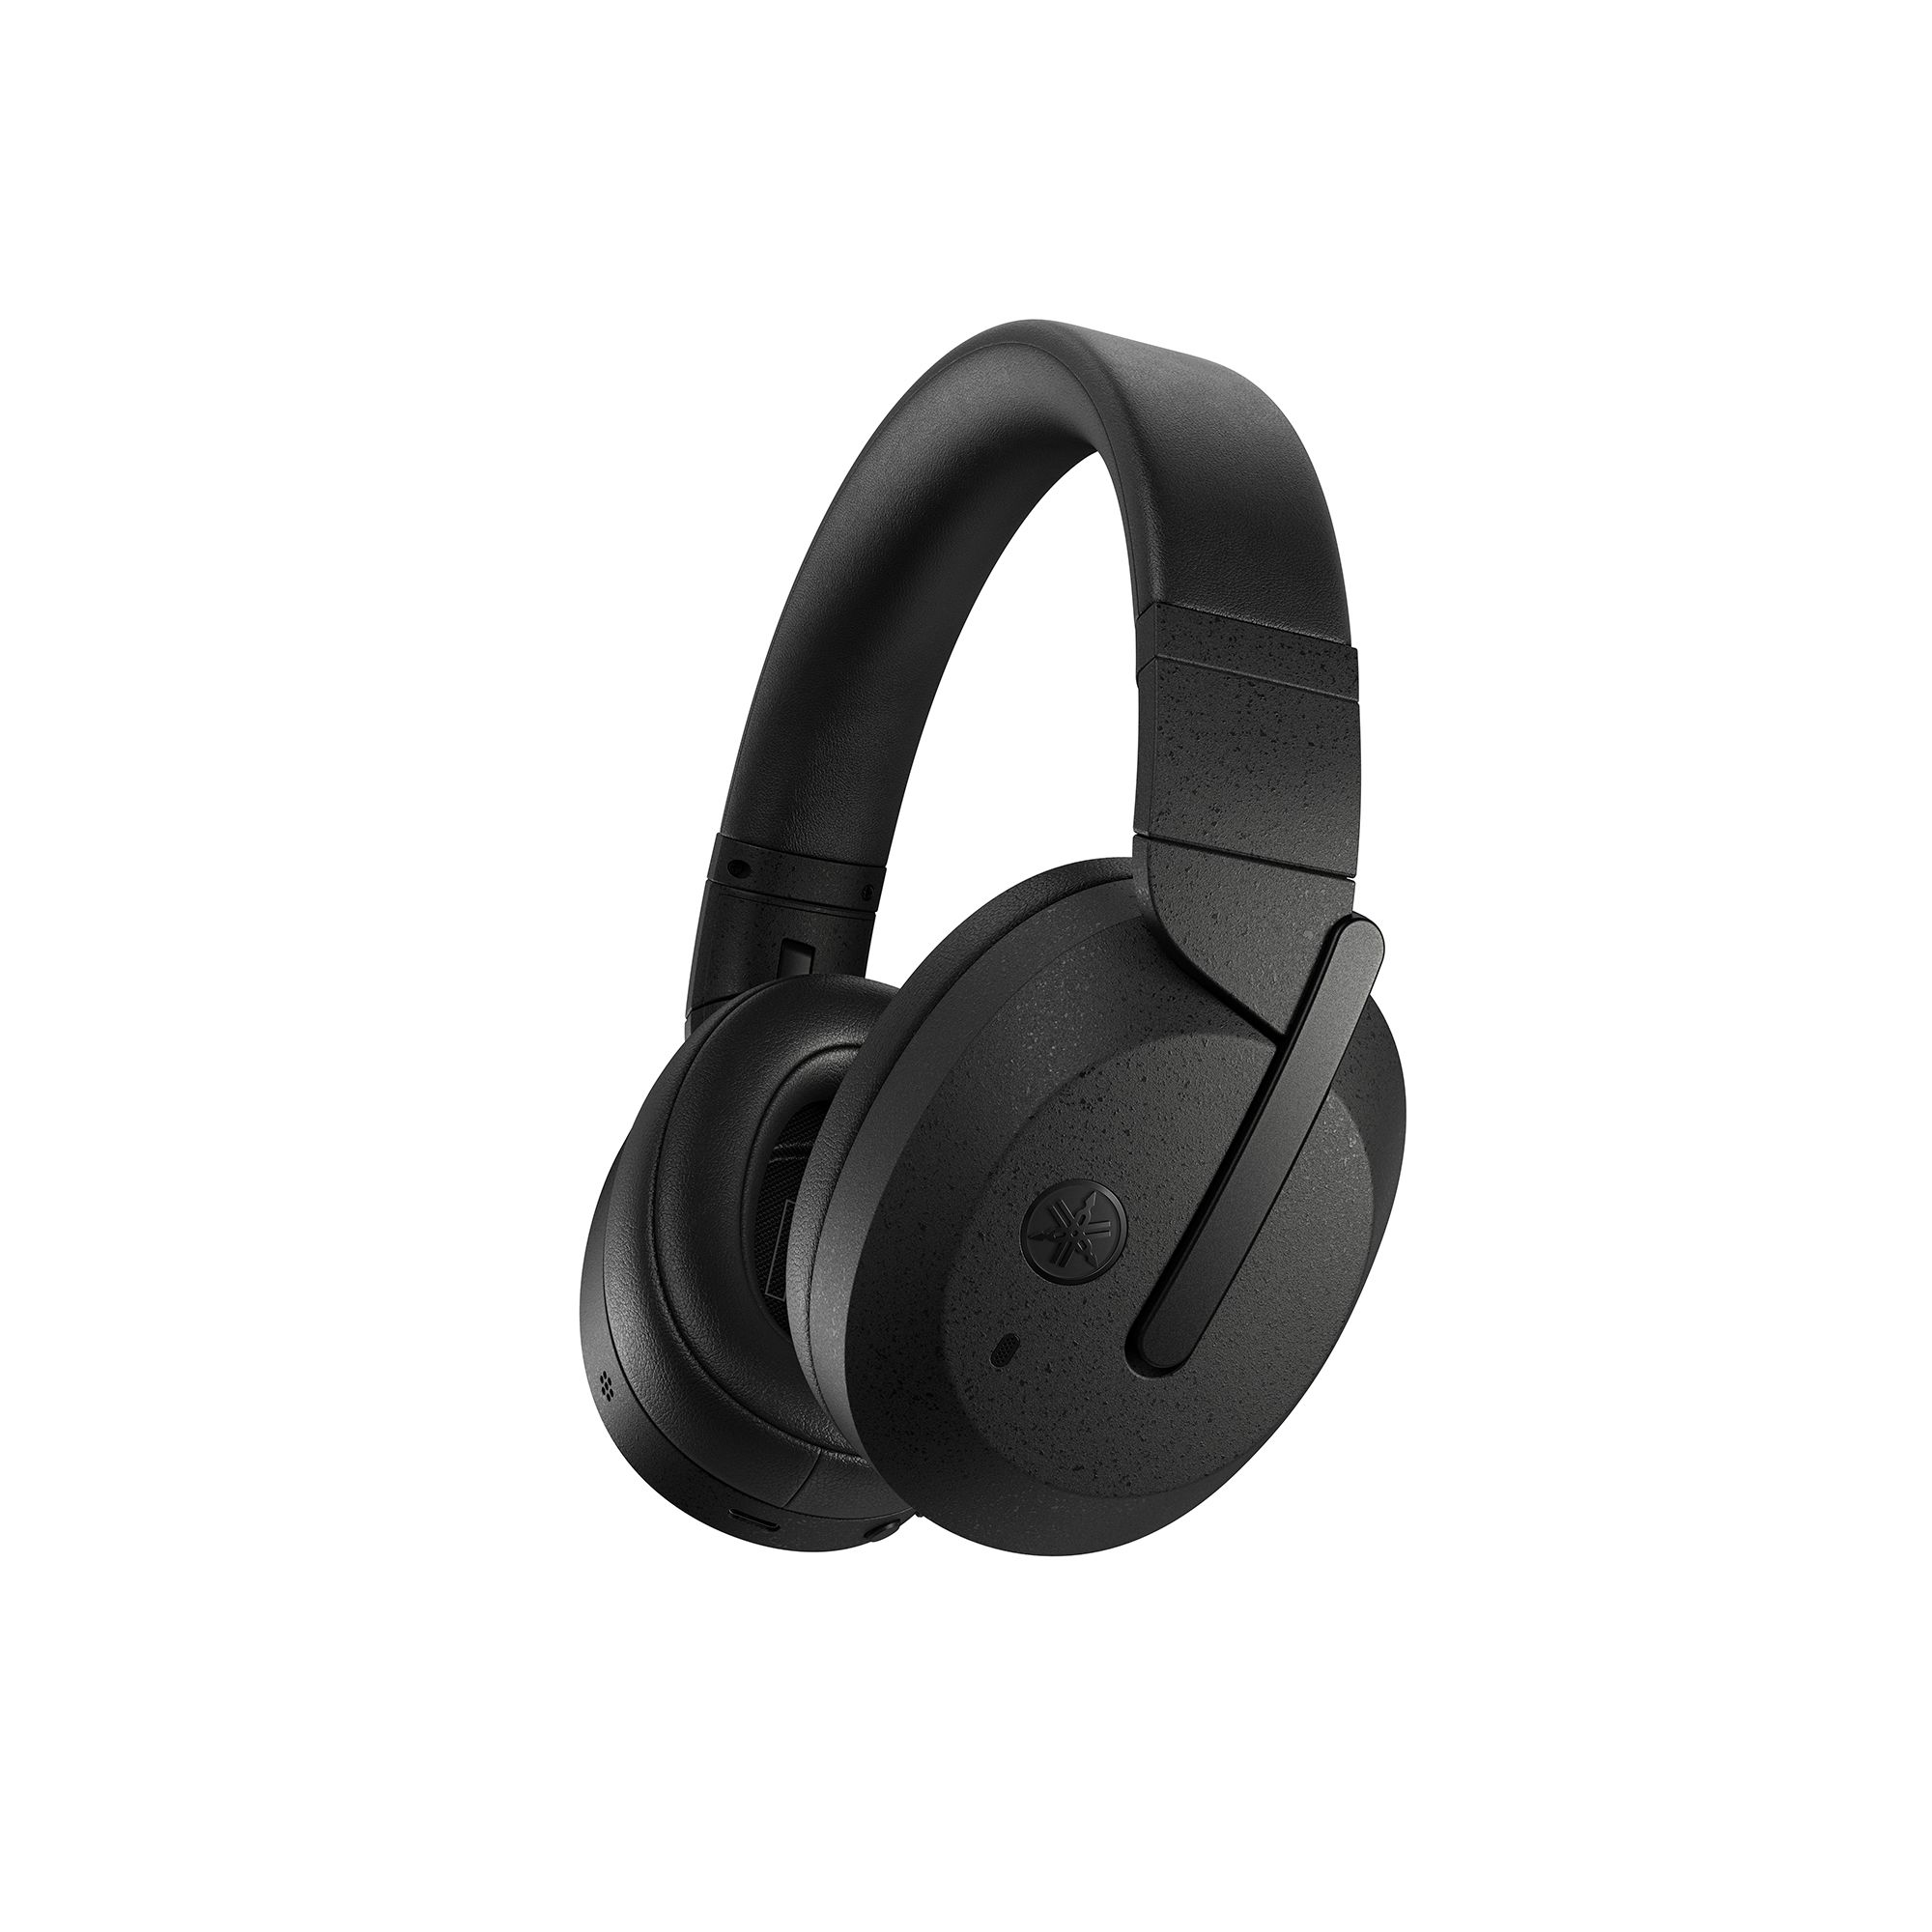 Headphones - Audio & Visual - Products - Yamaha USA